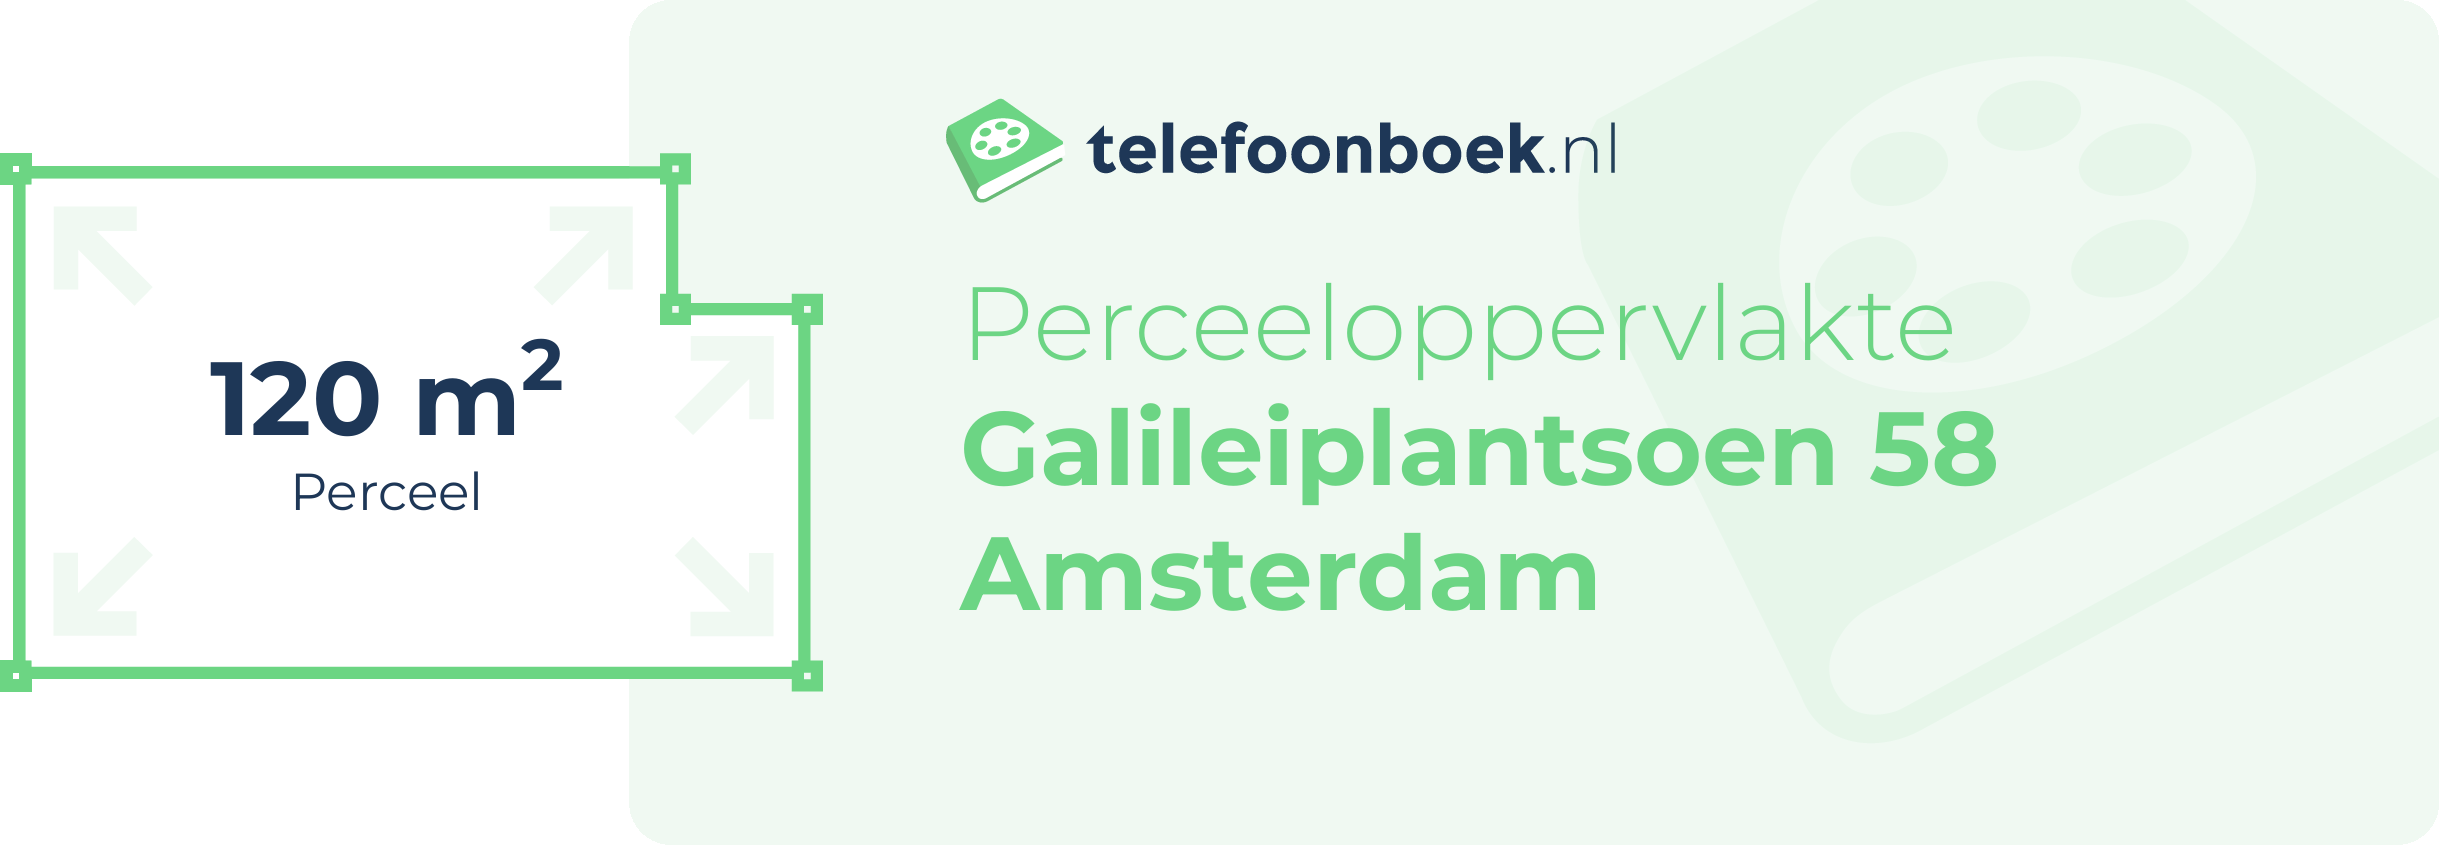 Perceeloppervlakte Galileiplantsoen 58 Amsterdam